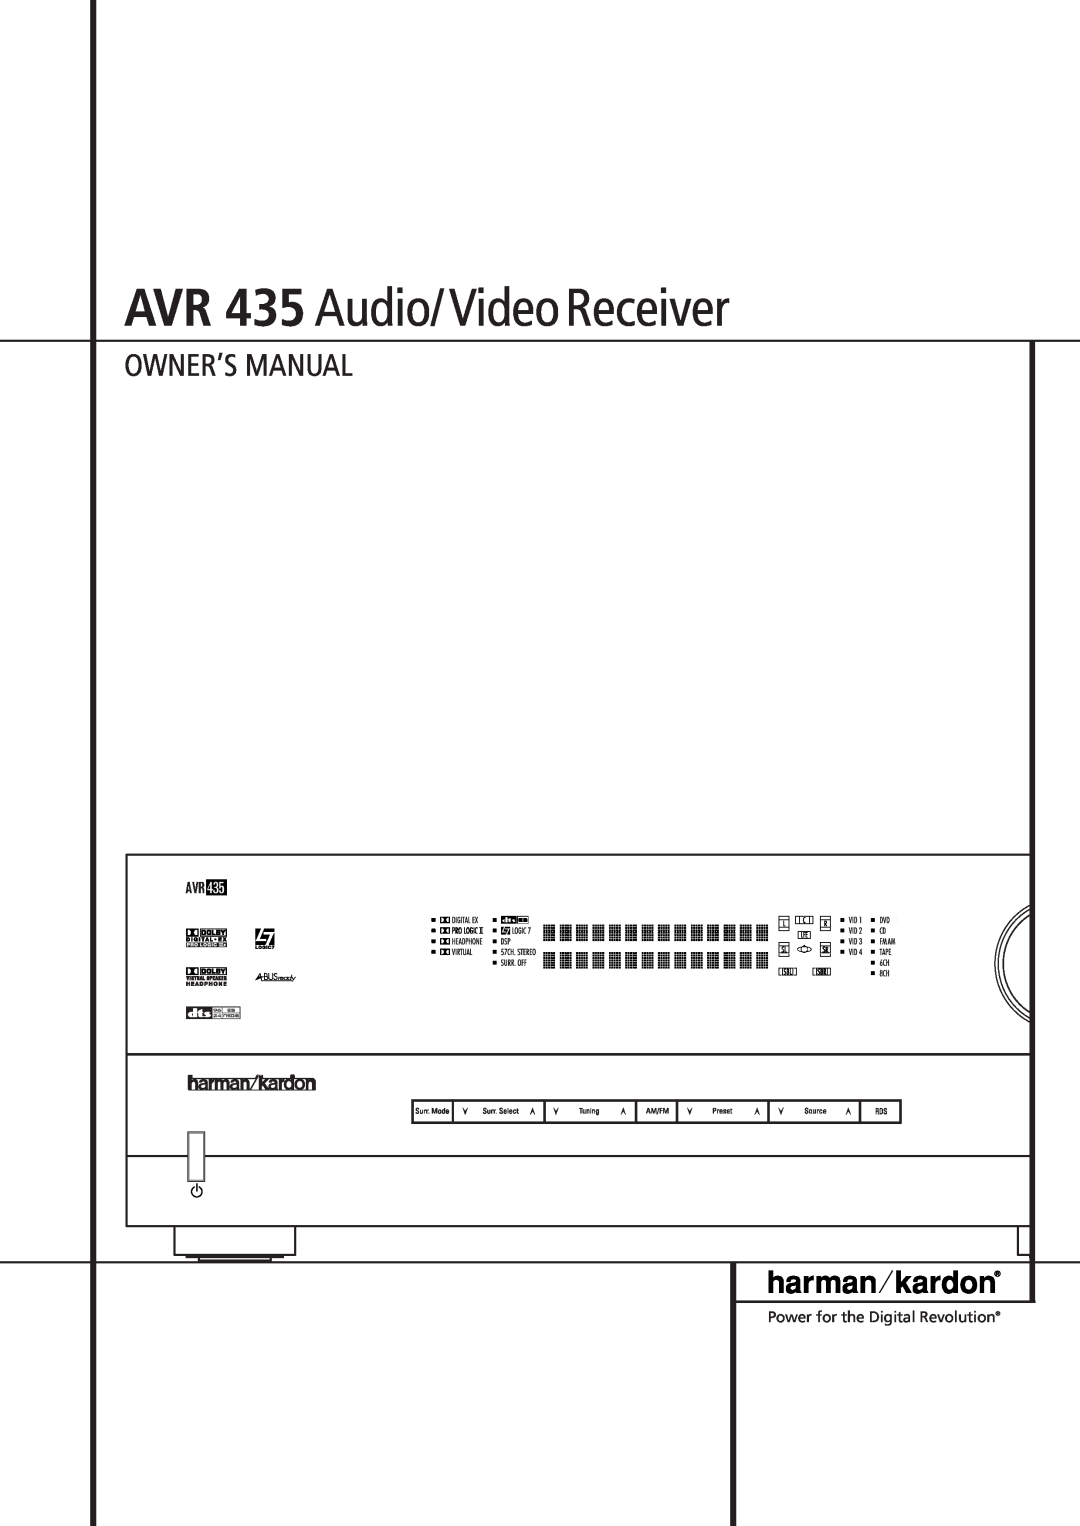 Harman-Kardon owner manual AVR 435 Audio/ Video Receiver 